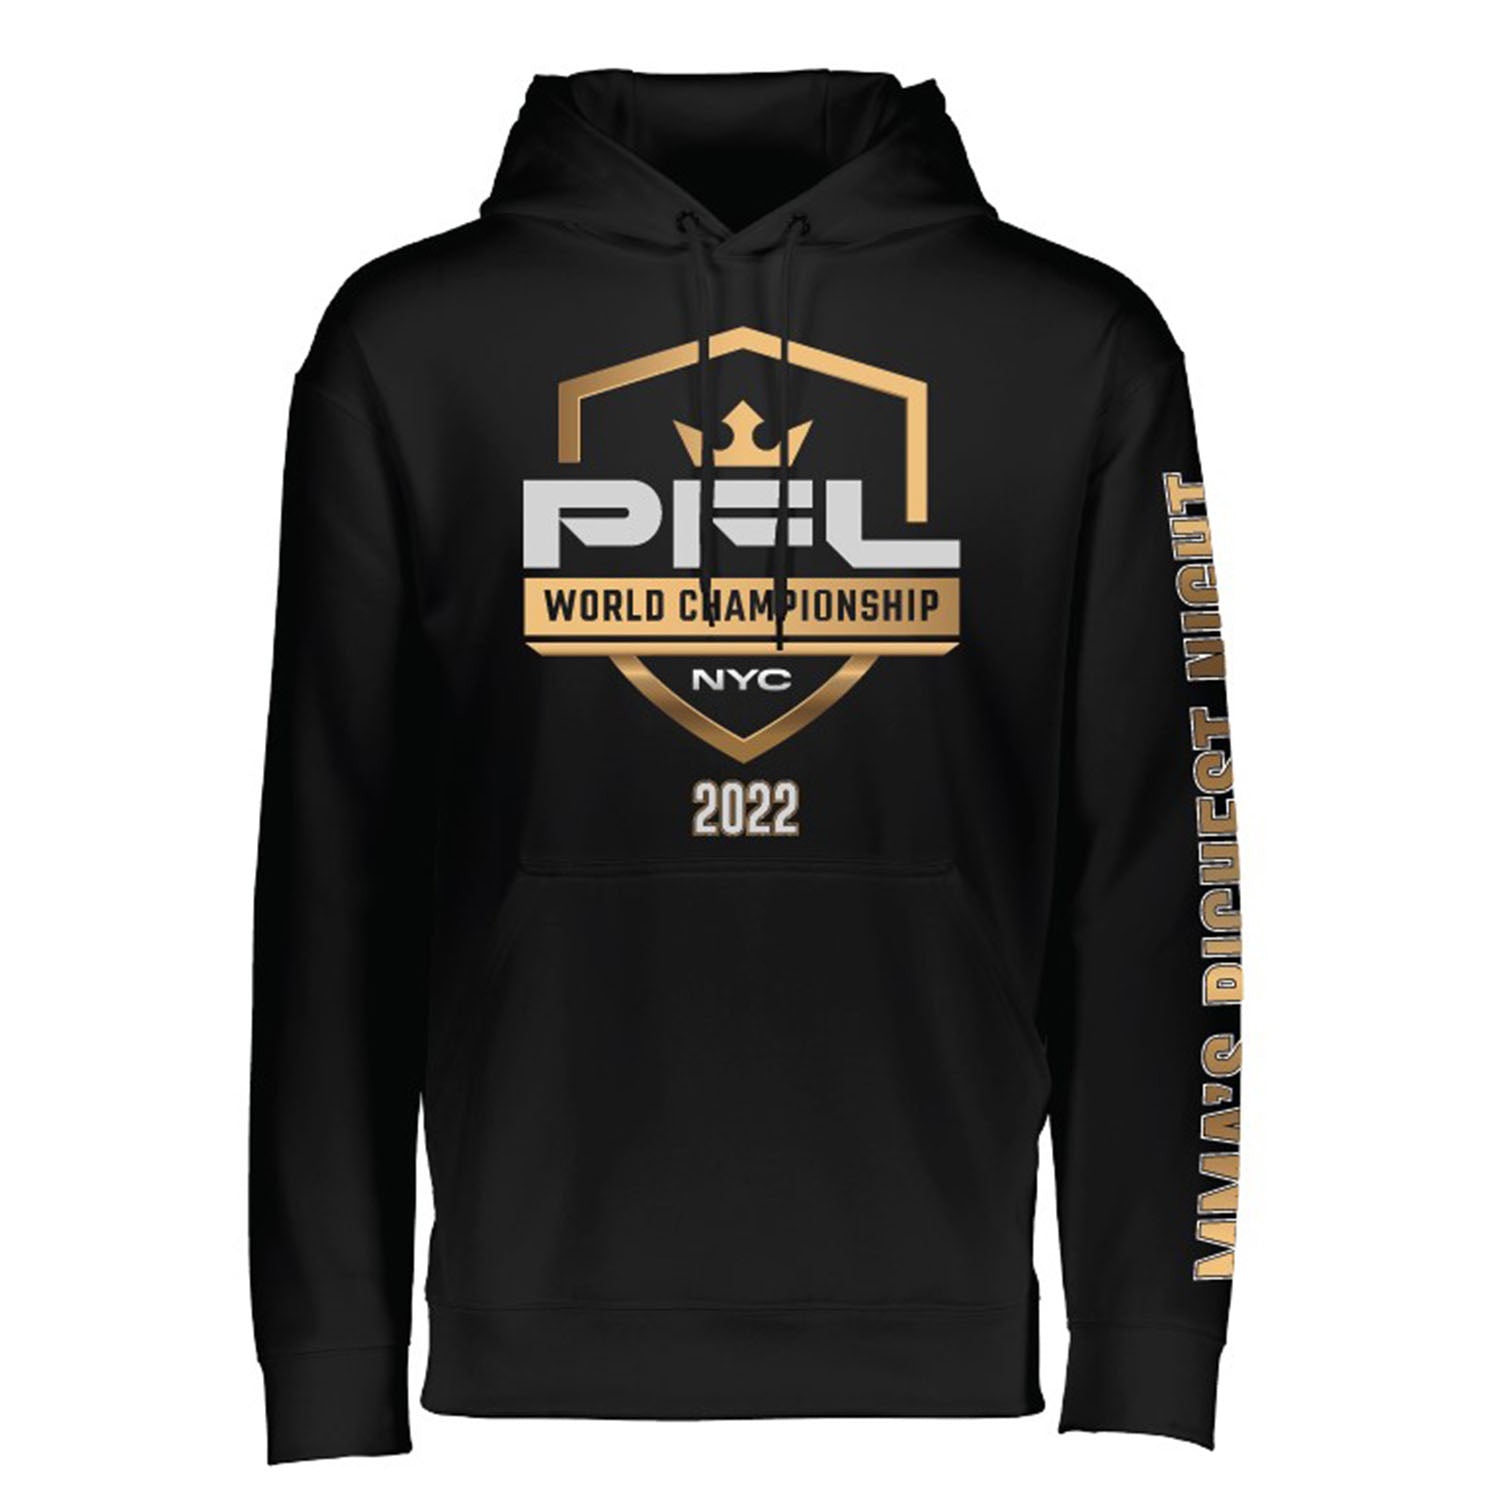 PFL Championship Sweatshirt in Black - Front View